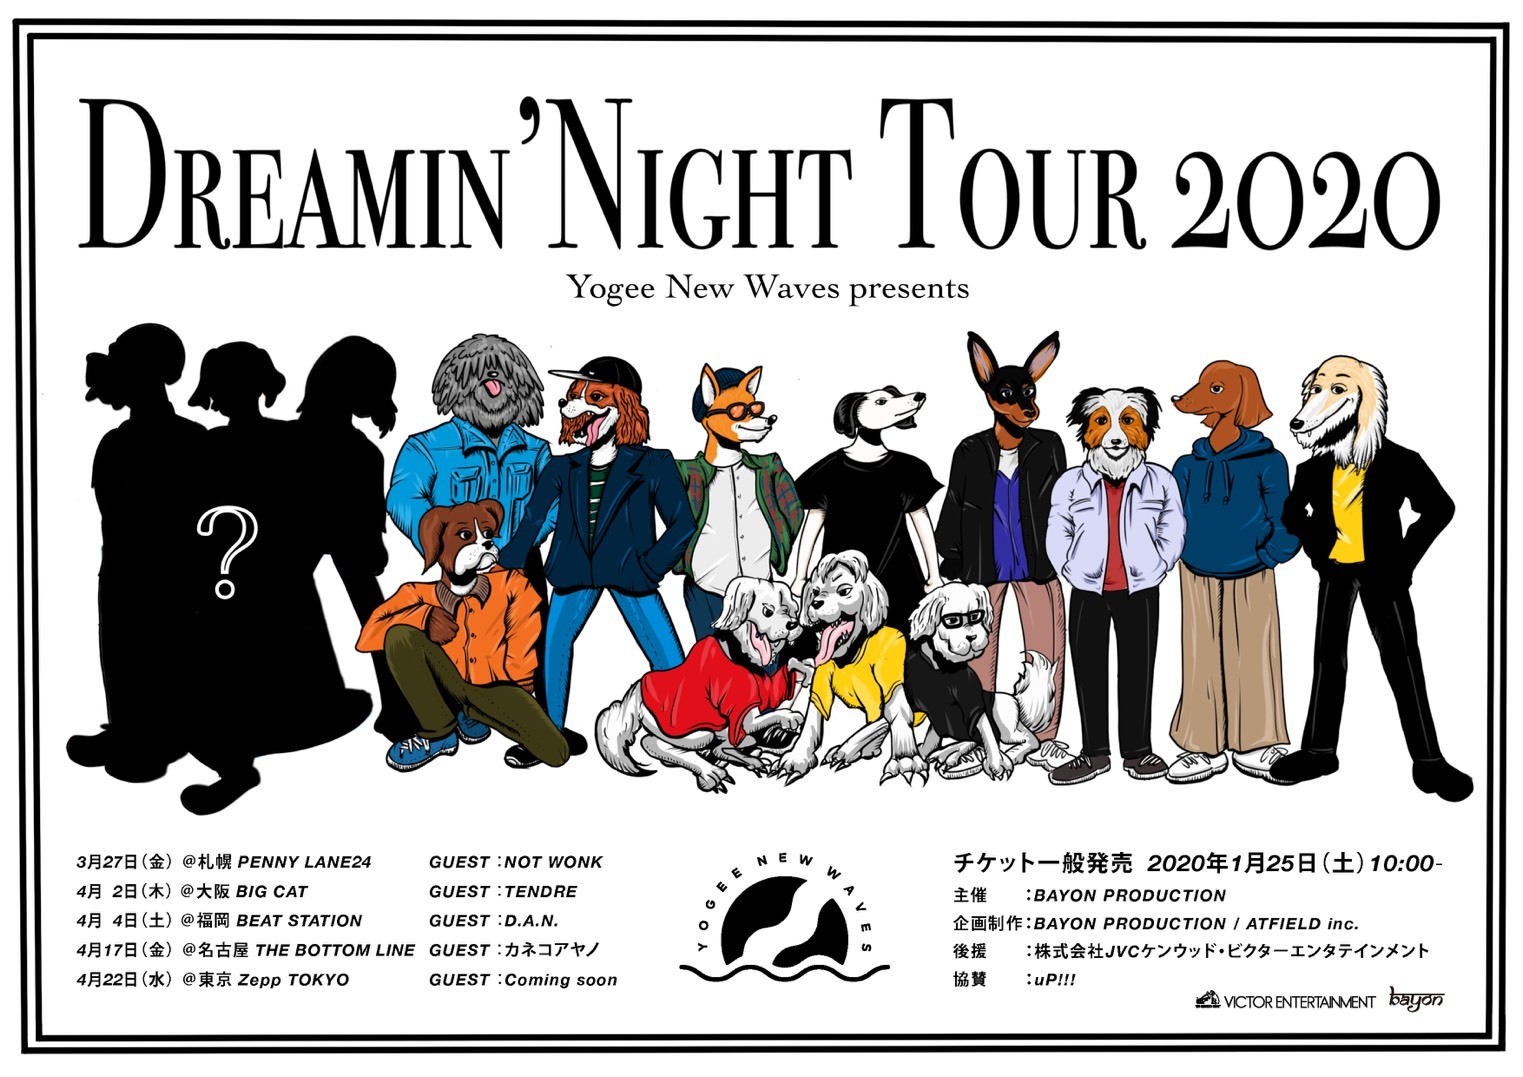 Dramin’ Night Tour 2020